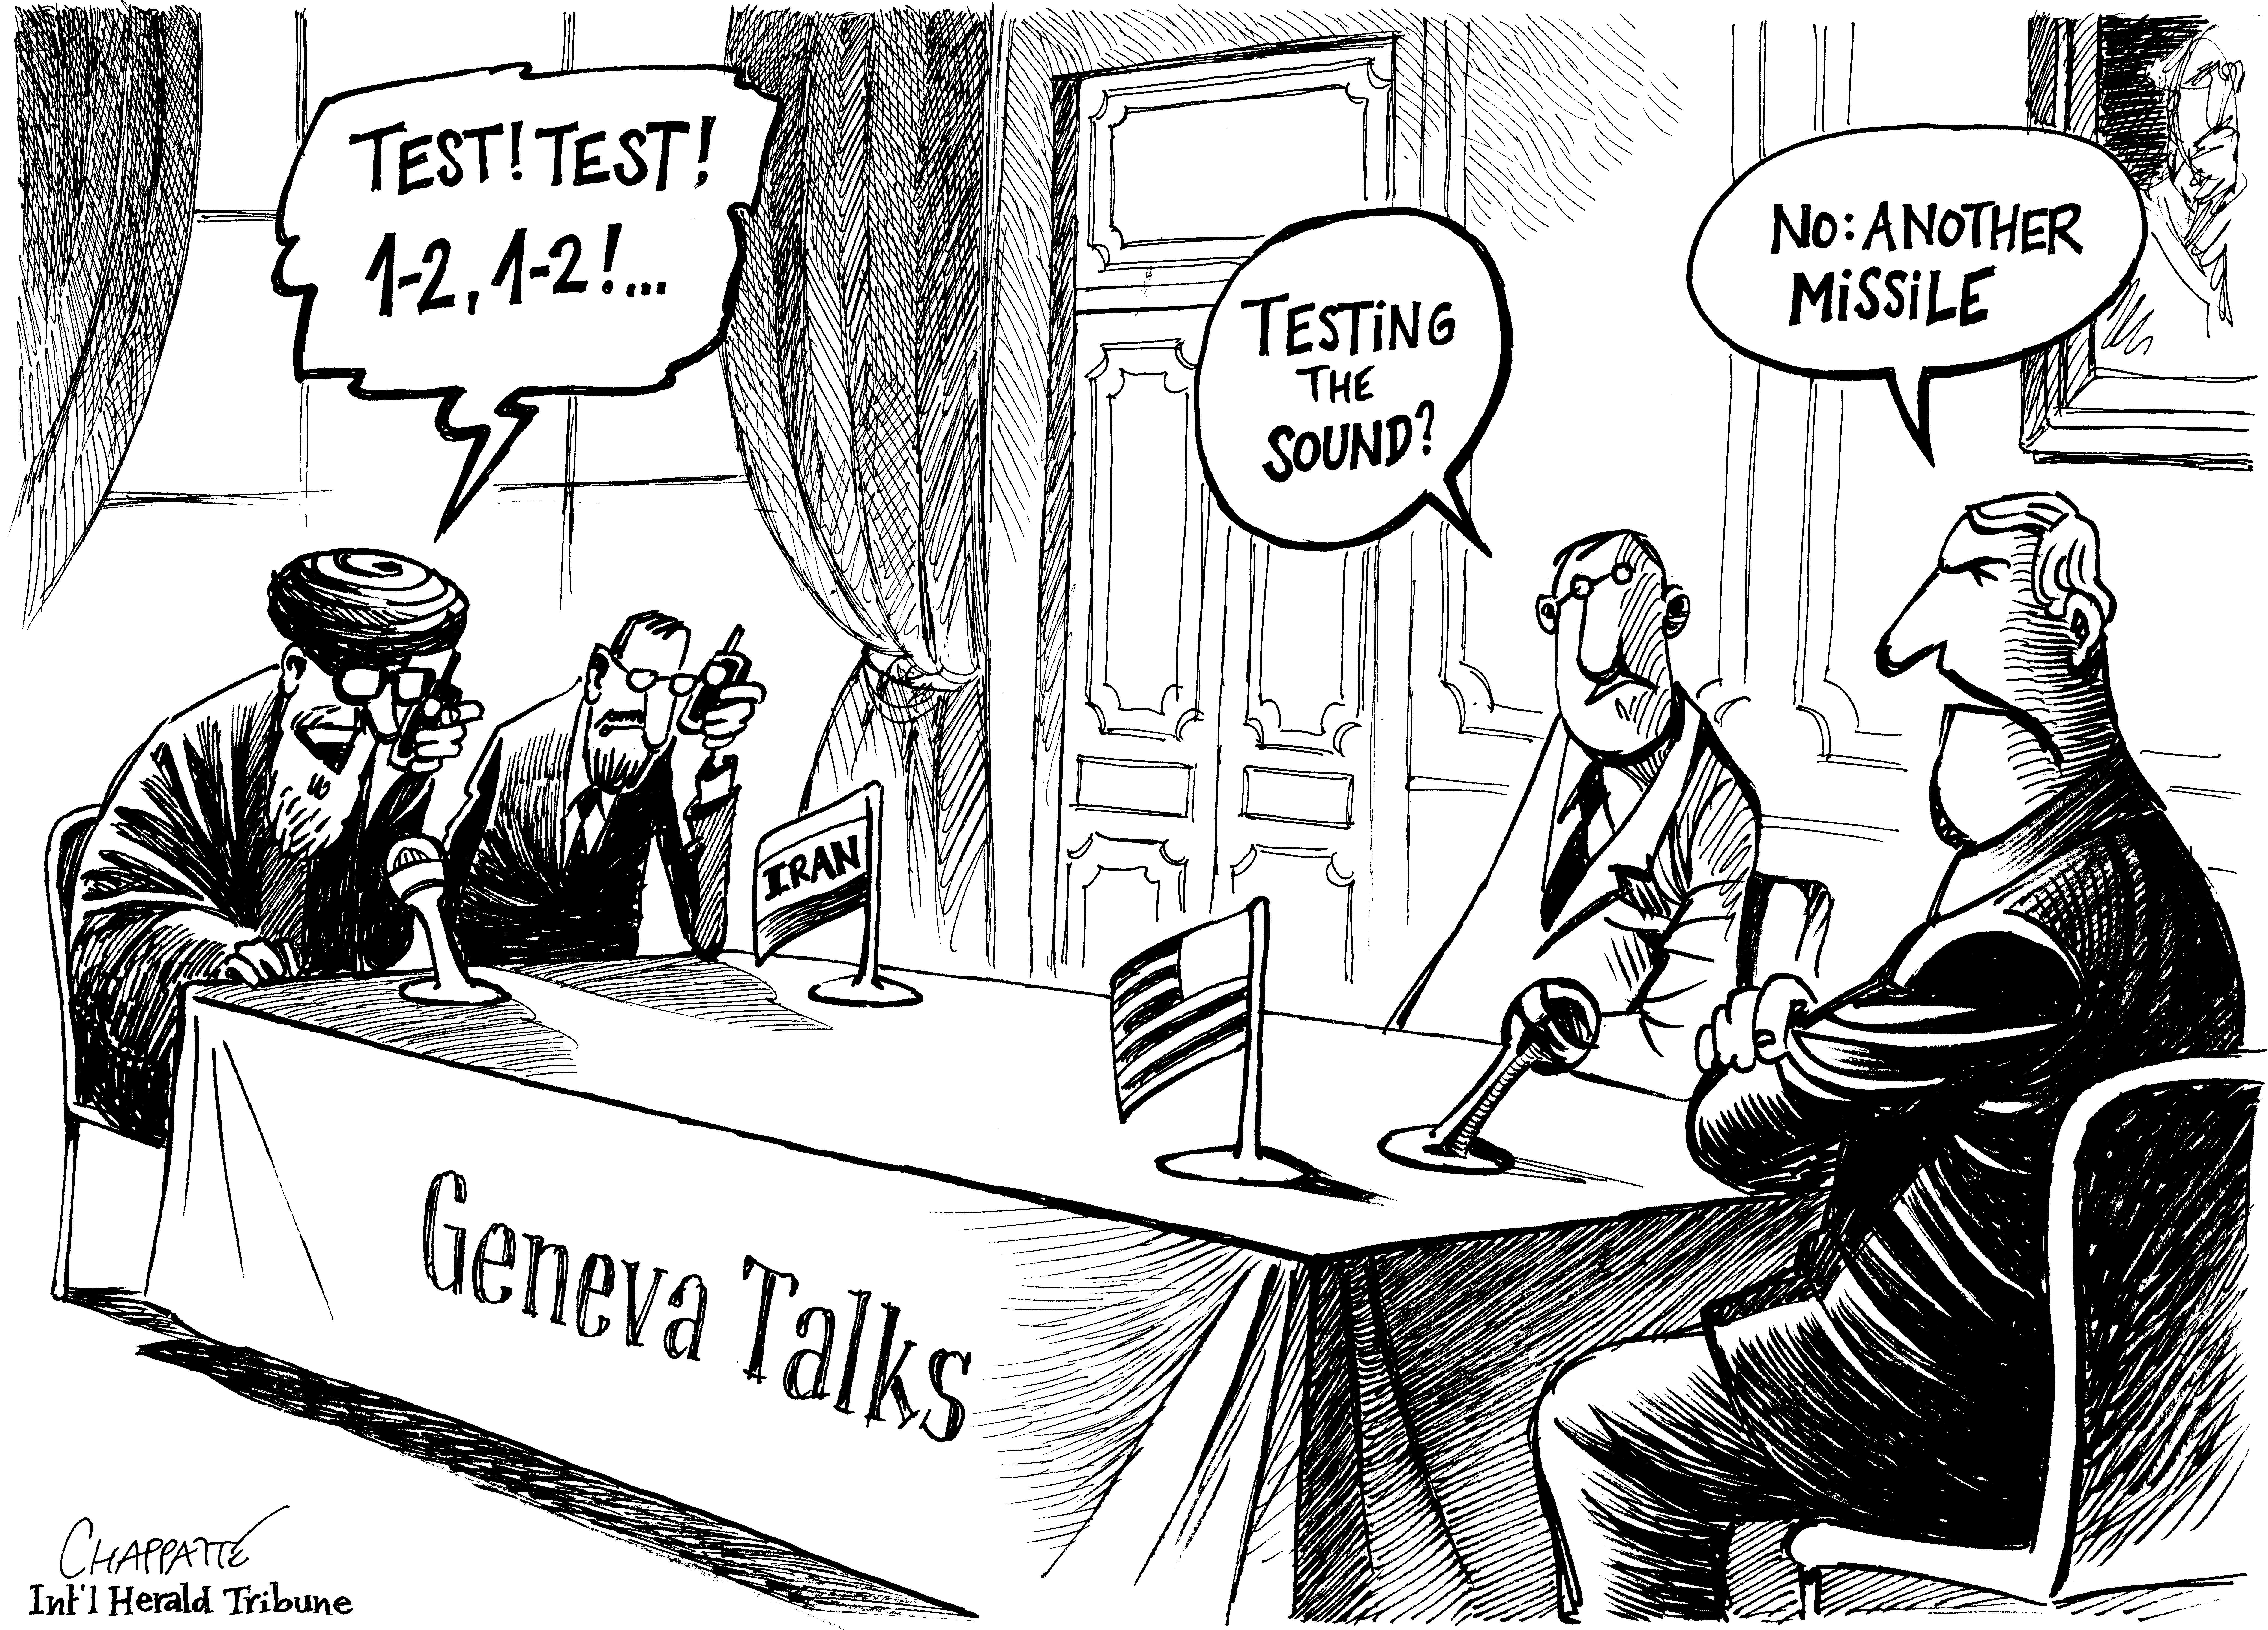 Nuclear Talks With Iran